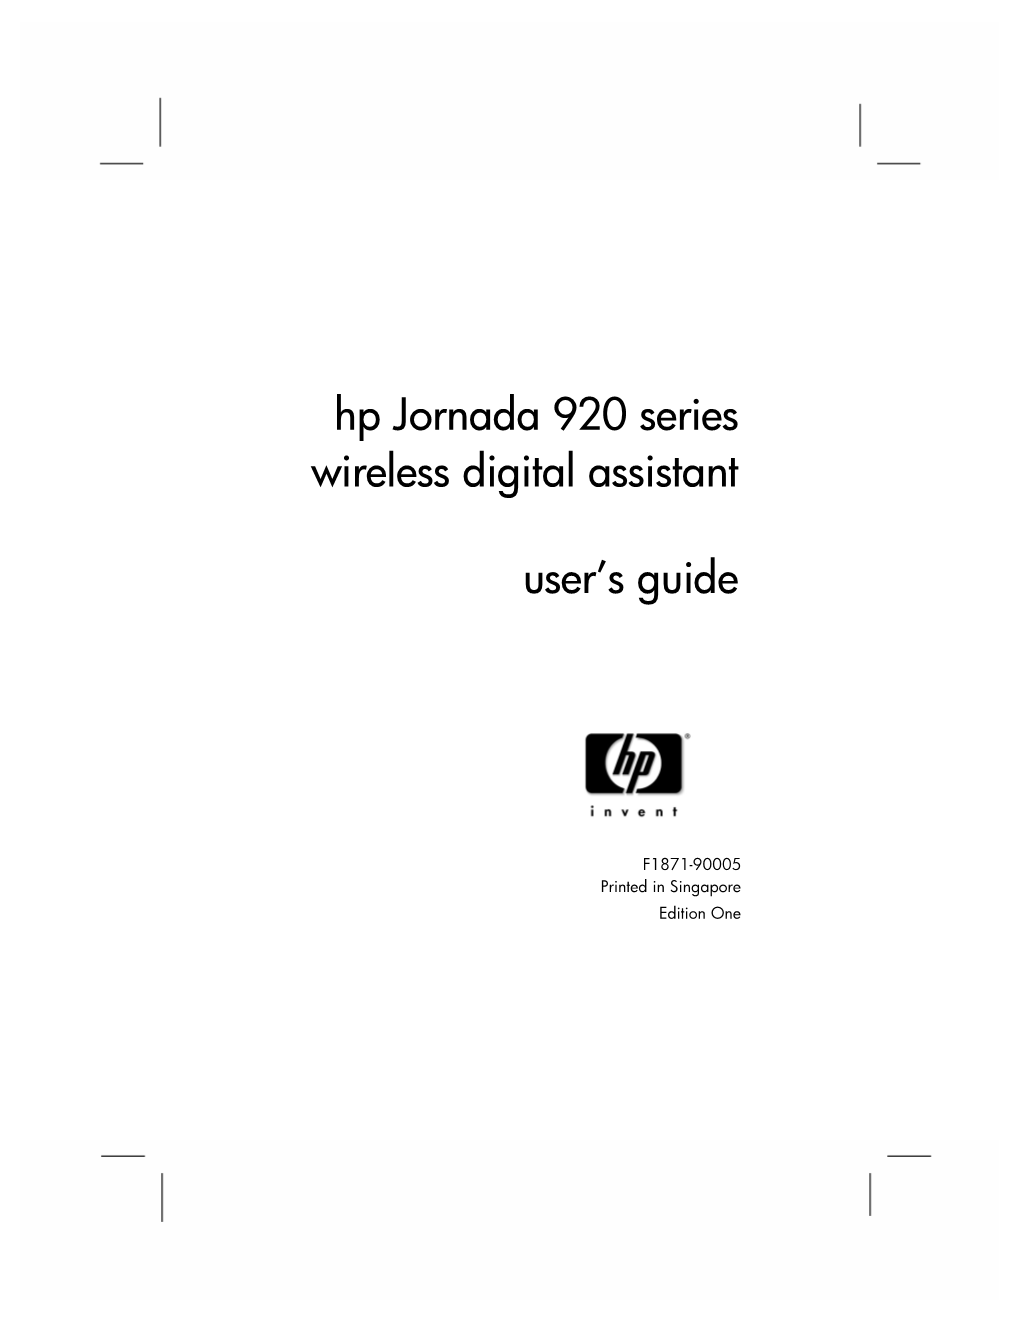 Hp Jornada 920 Series Wireless Digital Assistant User's Guide